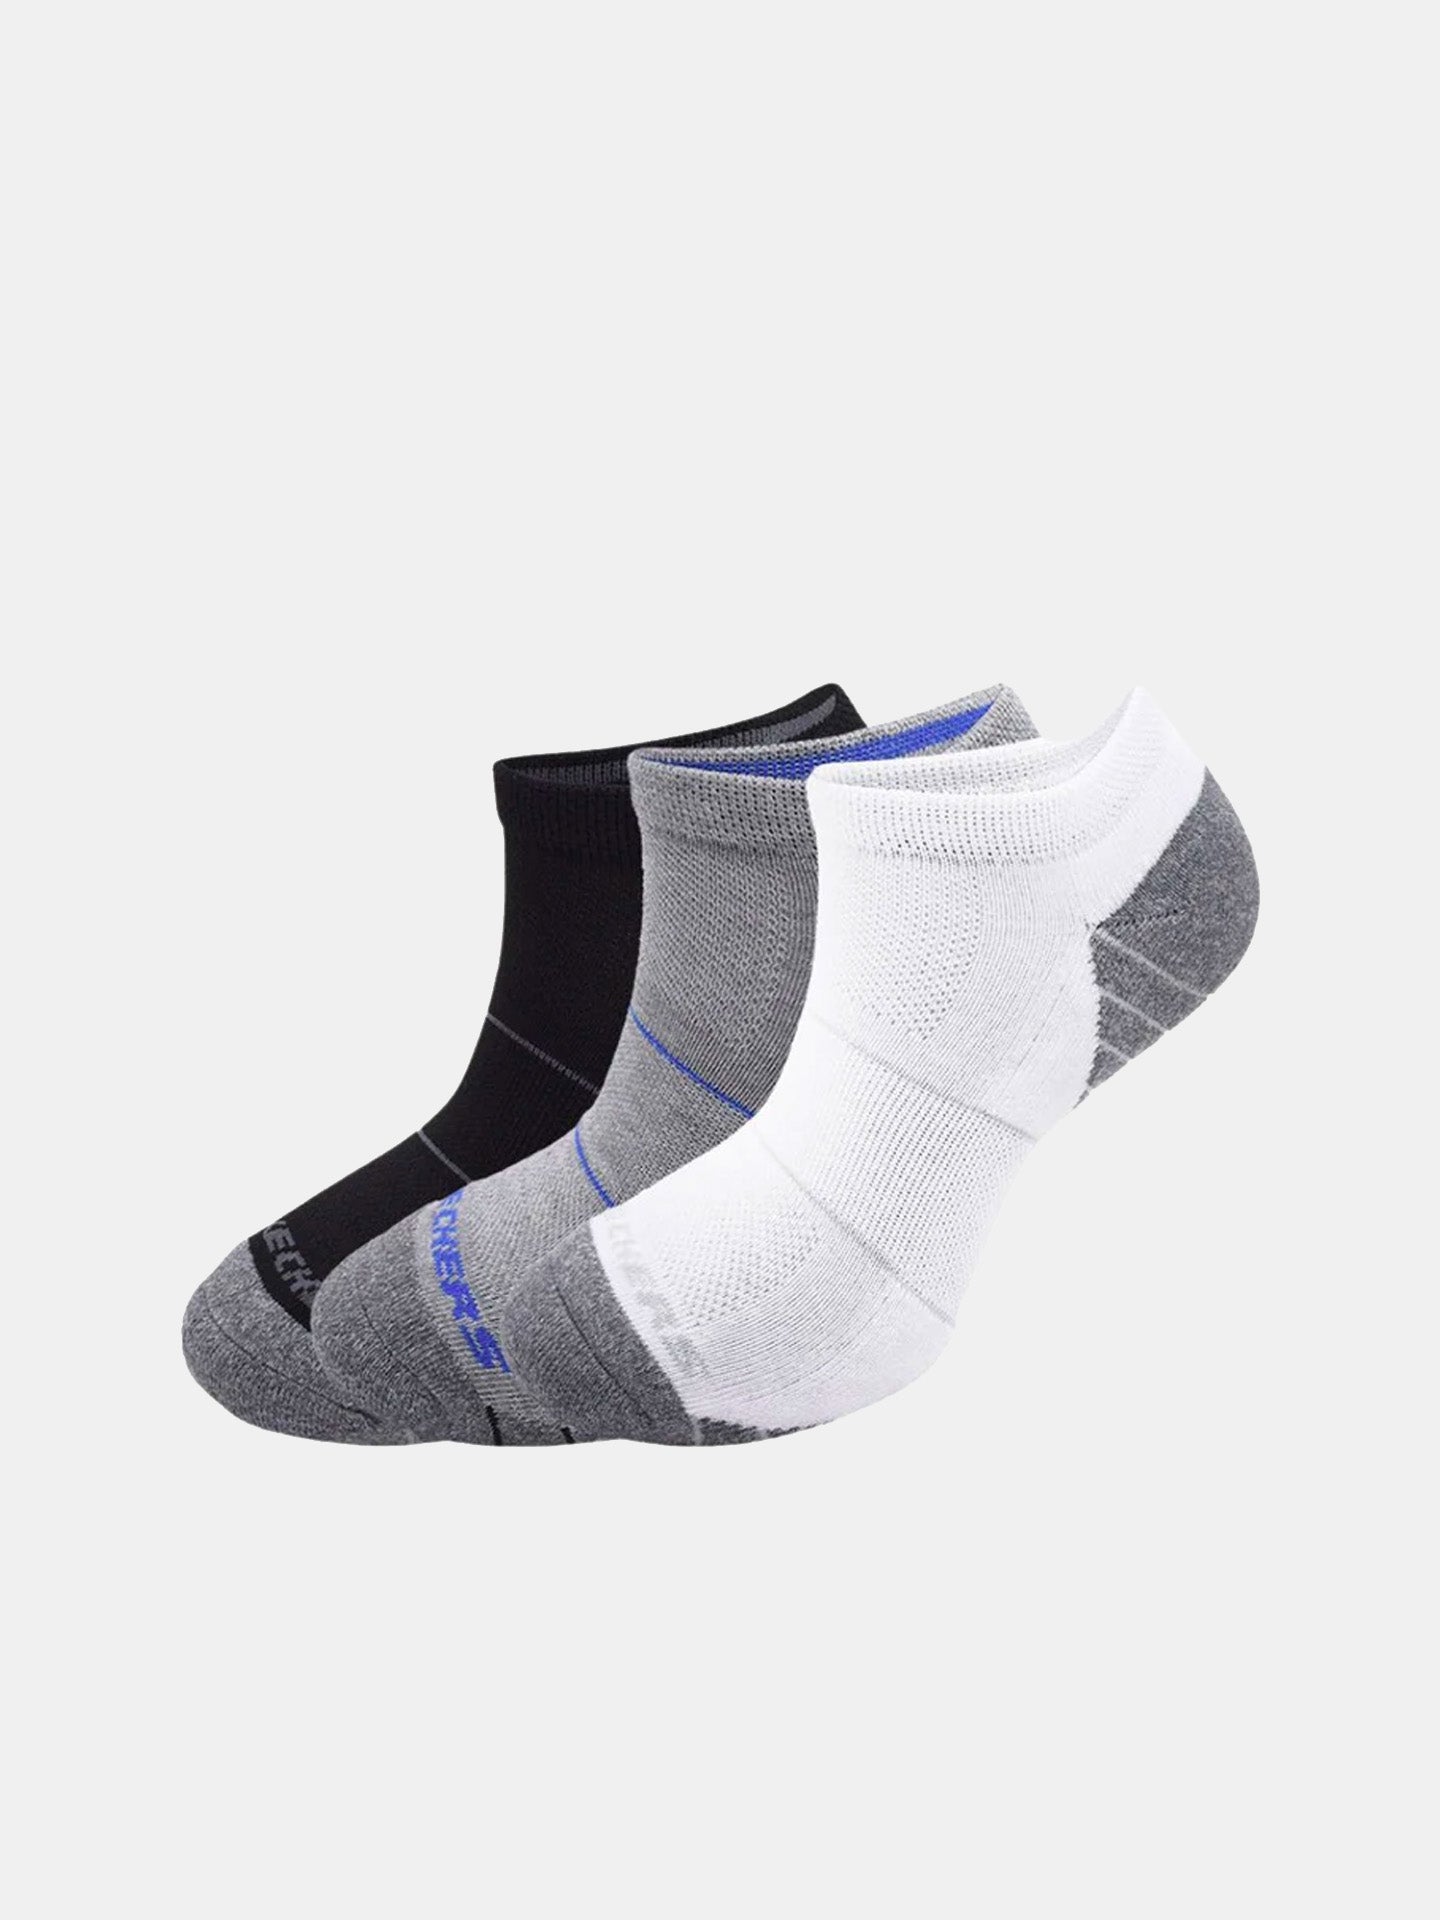 Skechers Men's 3 Pack Extended Terry Low Cut Socks